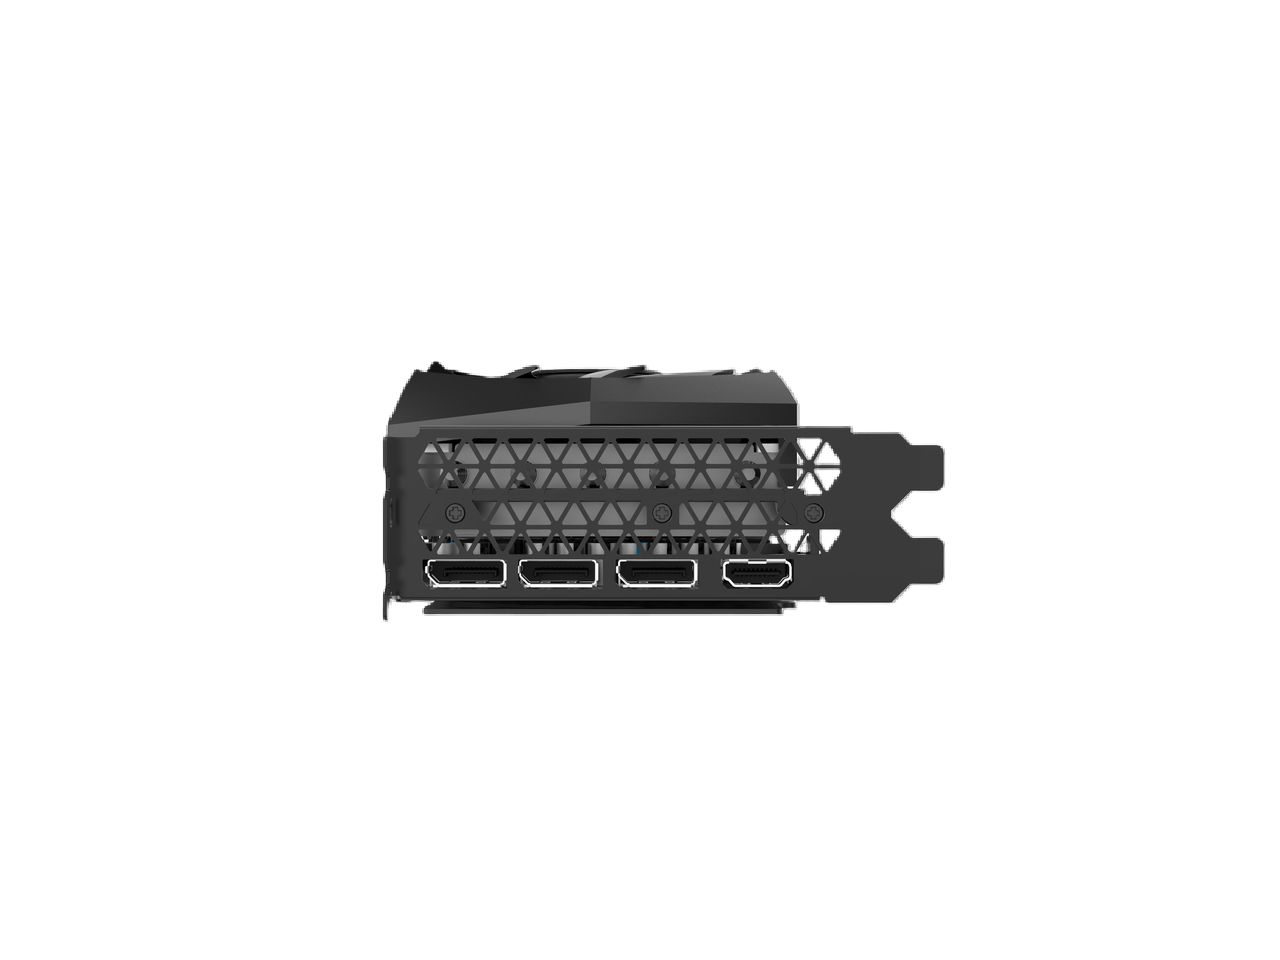 ZOTAC GAMING GeForce RTX 3070 Ti 8GB GDDR6X 256-bit 19 Gbps PCIE 4.0 Gaming Graphics Card, IceStorm 2.0 Advanced Cooling, SPECTRA 2.0 RGB Lighting, ZT-A30710Q-10P